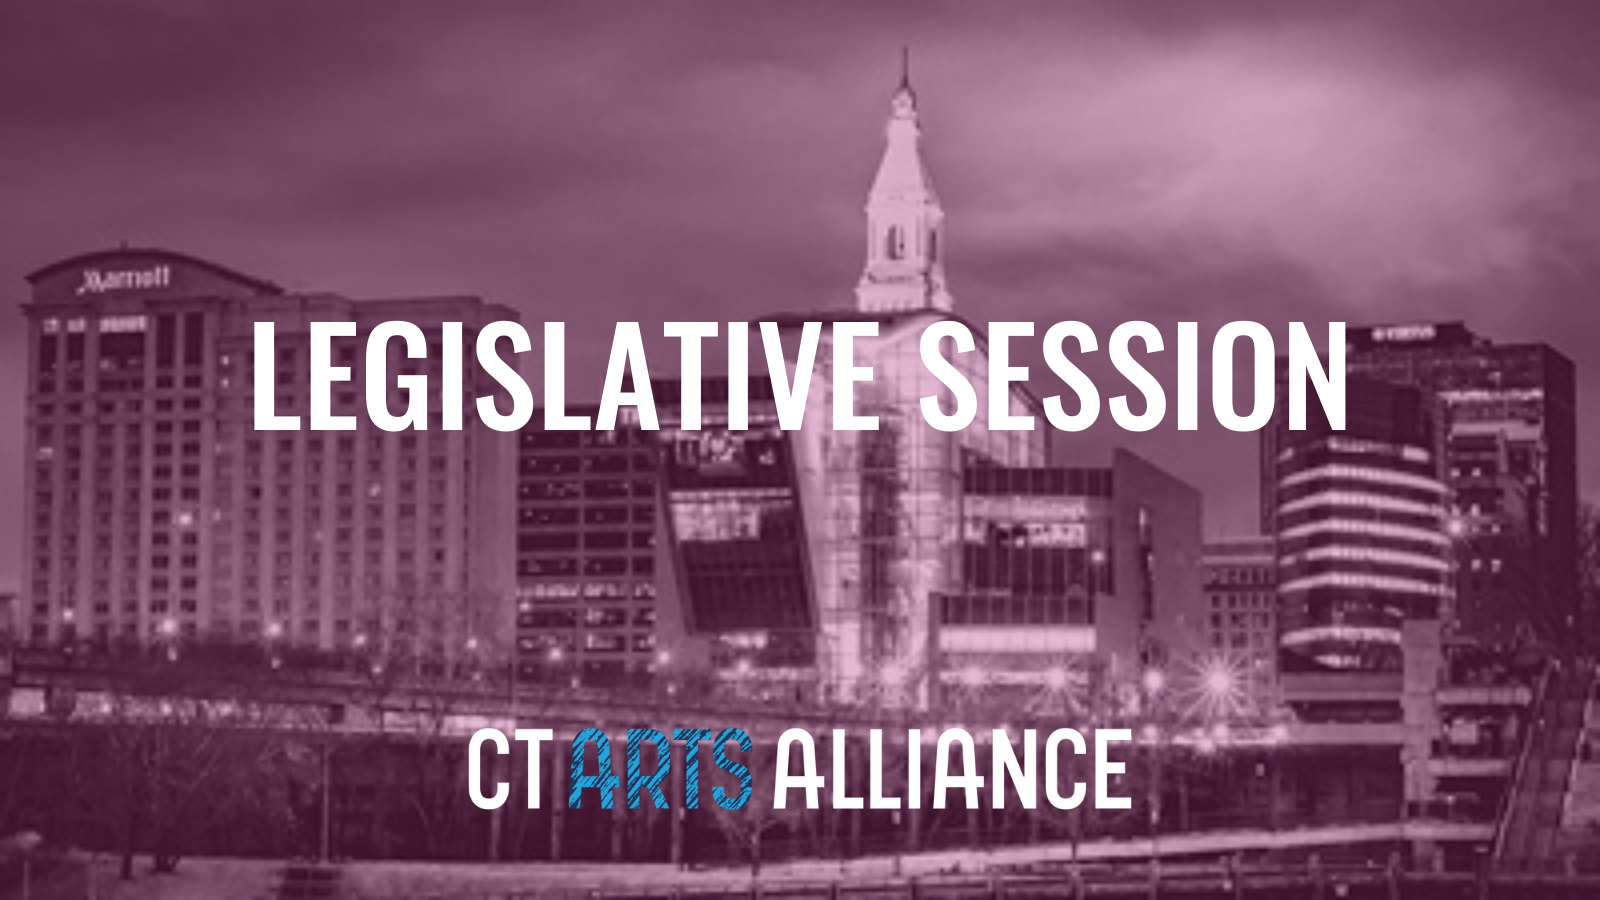 Legislative Session Information